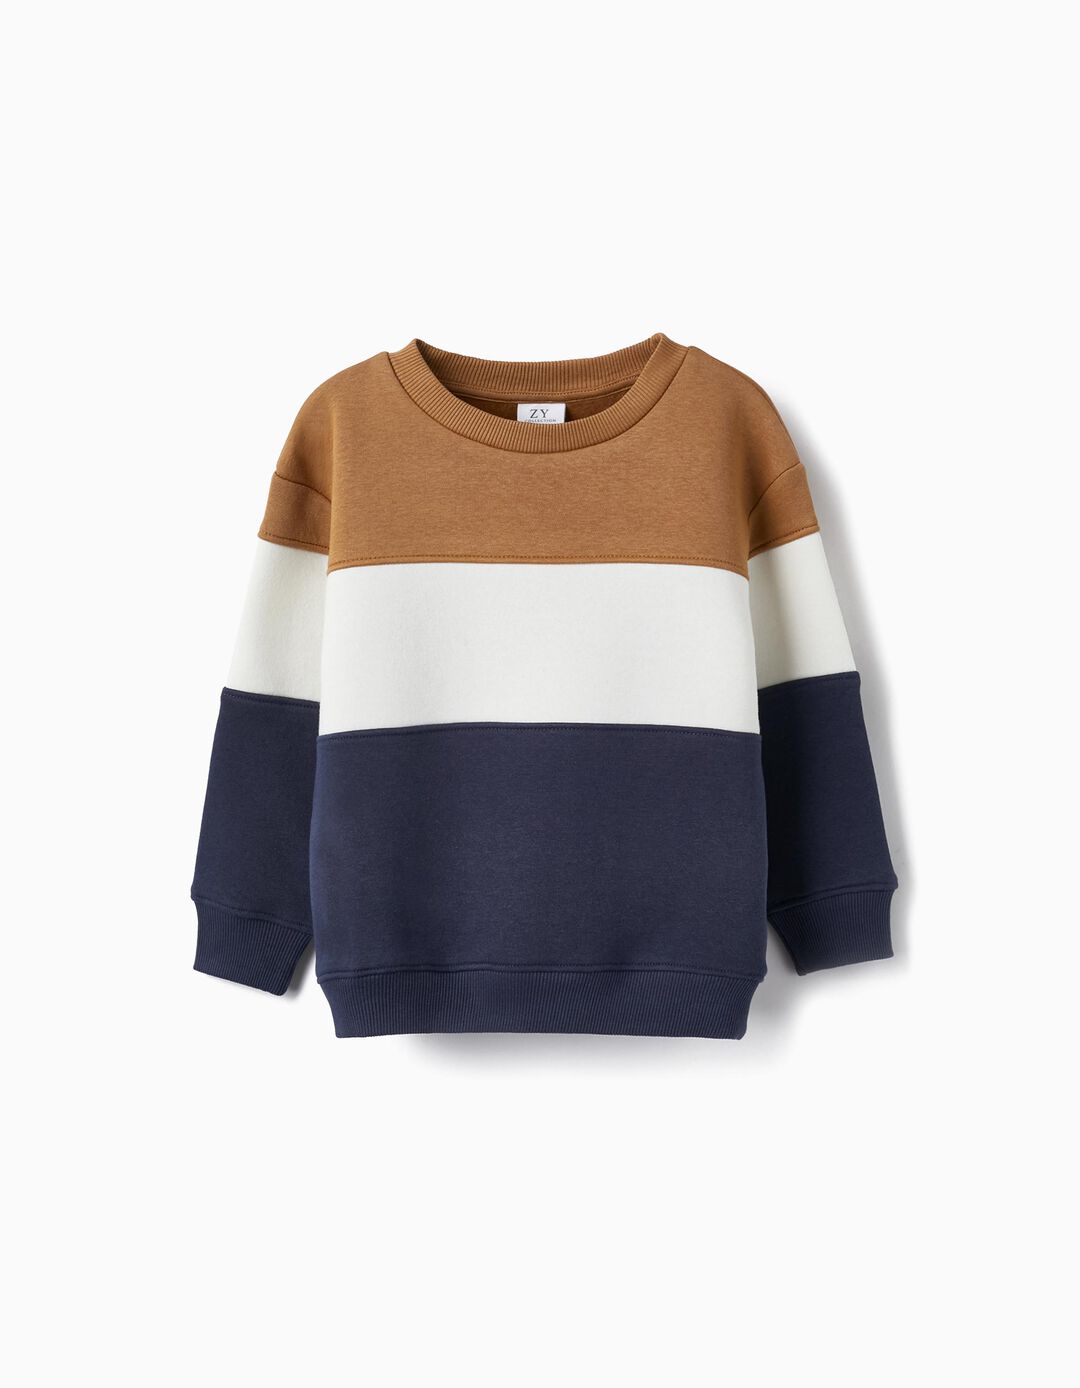 Brushed Sweatshirt for Boys, Brown/White/Dark Blue